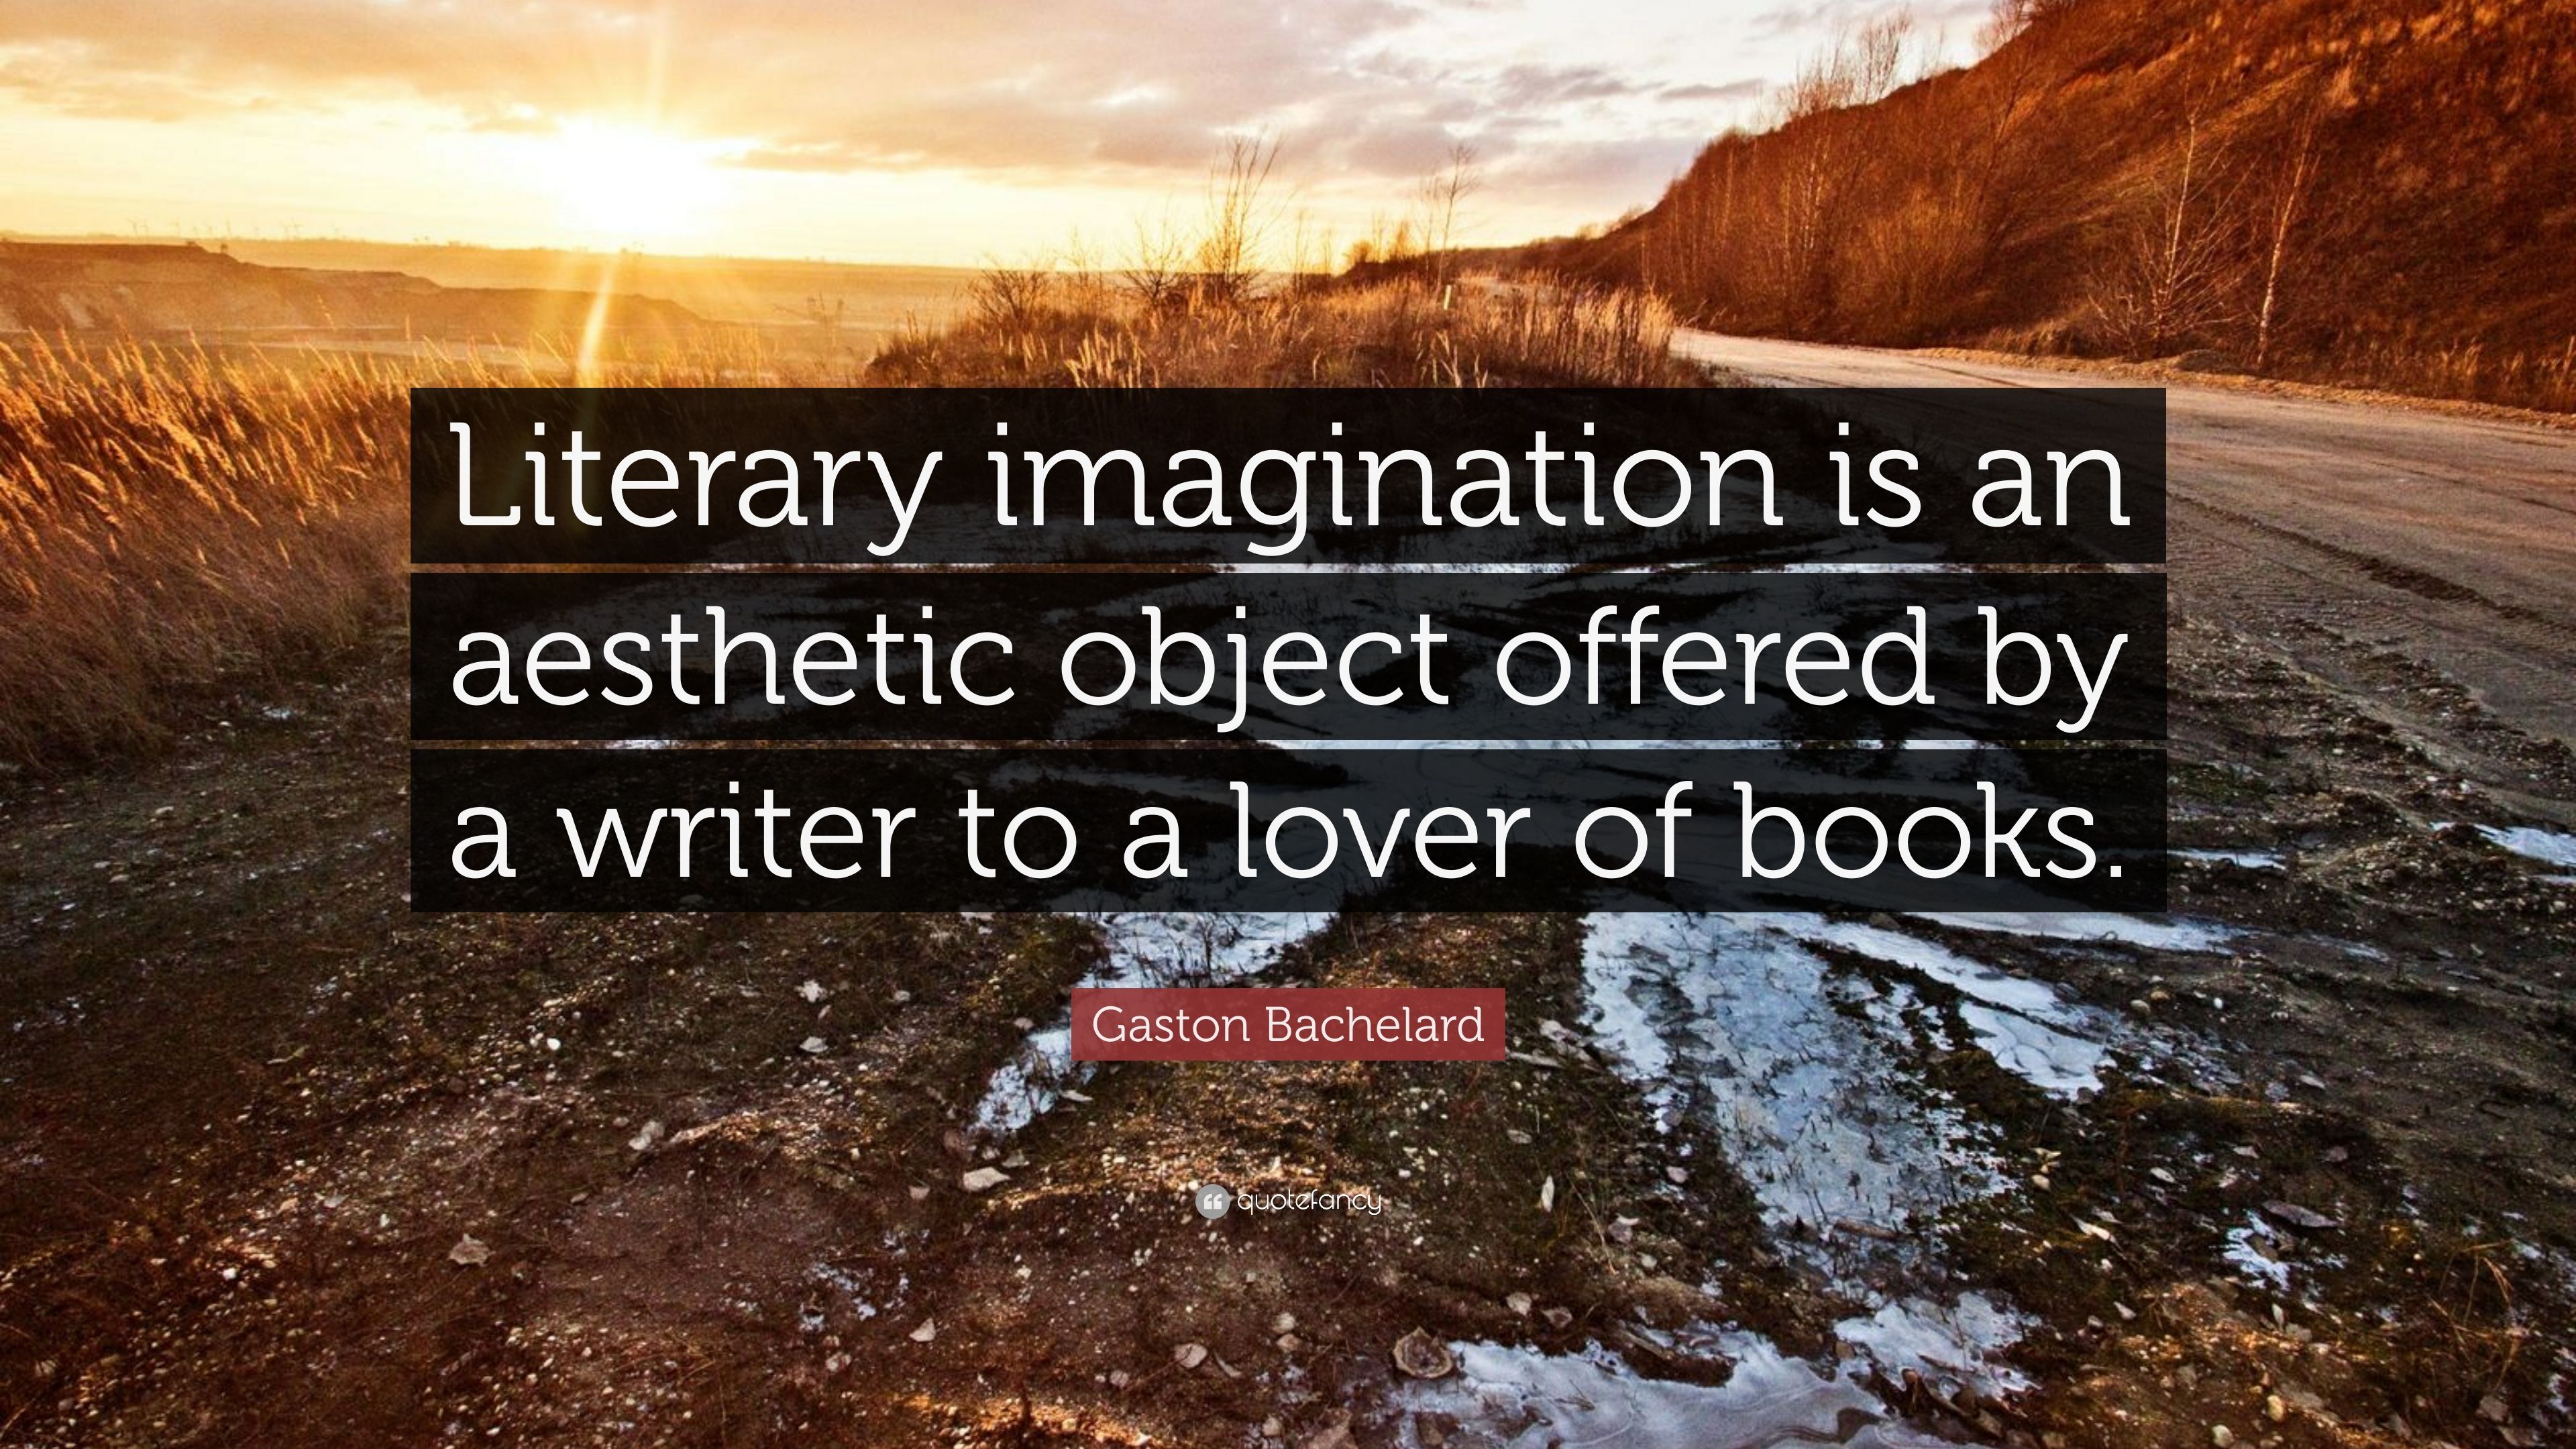 Gaston Bachelard Quote: “Literary imagination is an aesthetic